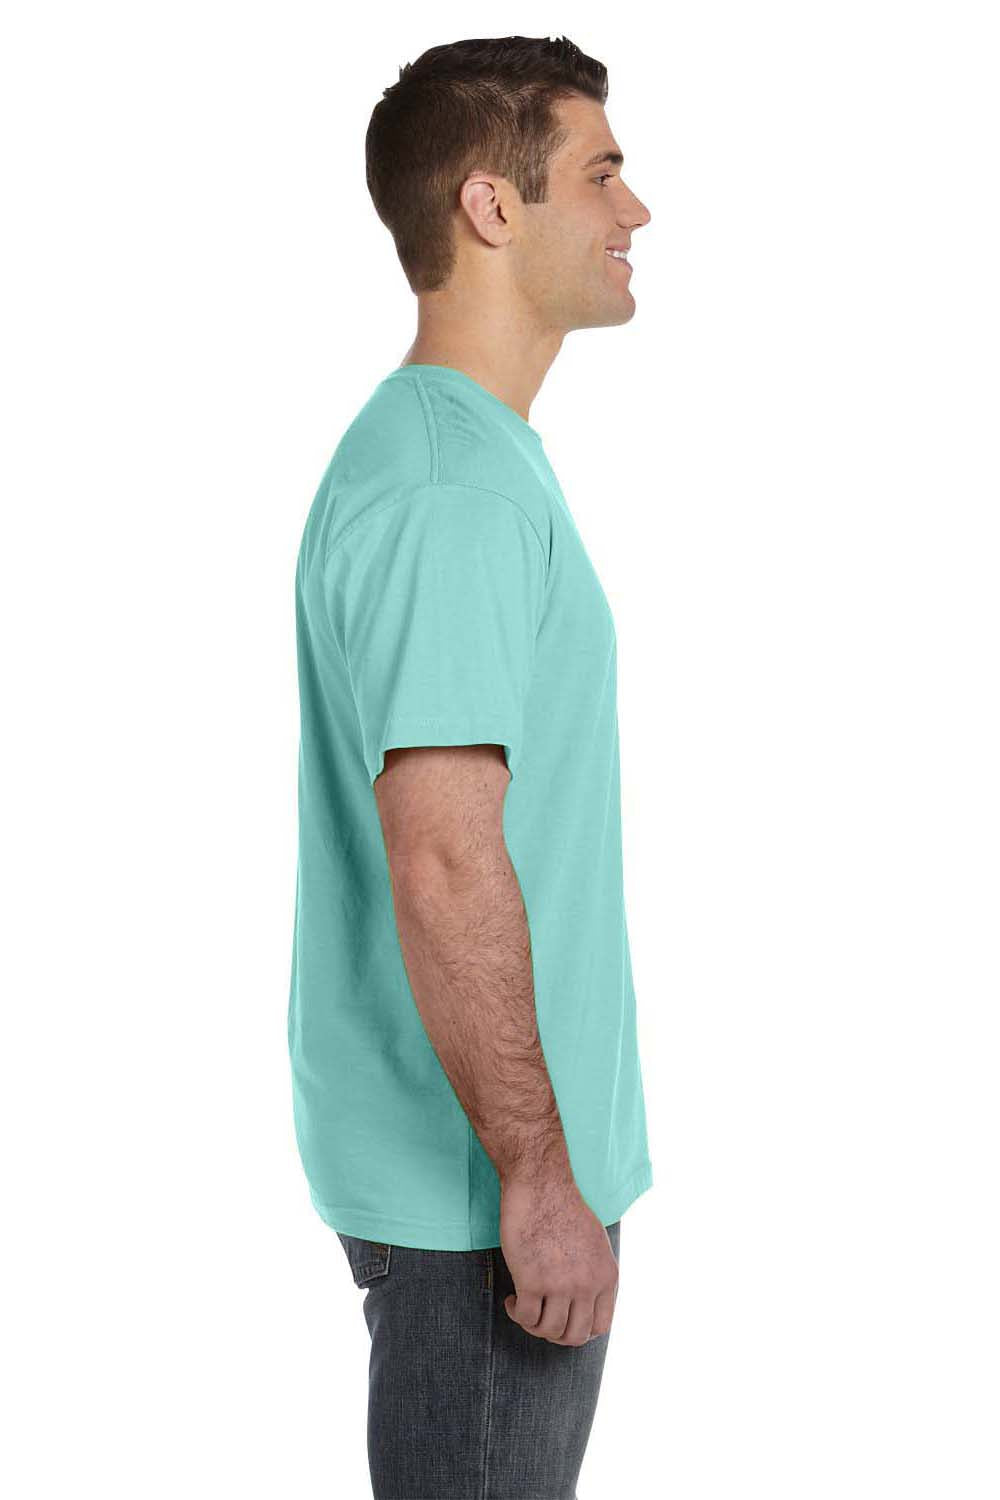 LAT 6901 Mens Fine Jersey Short Sleeve Crewneck T-Shirt Chill Blue Side